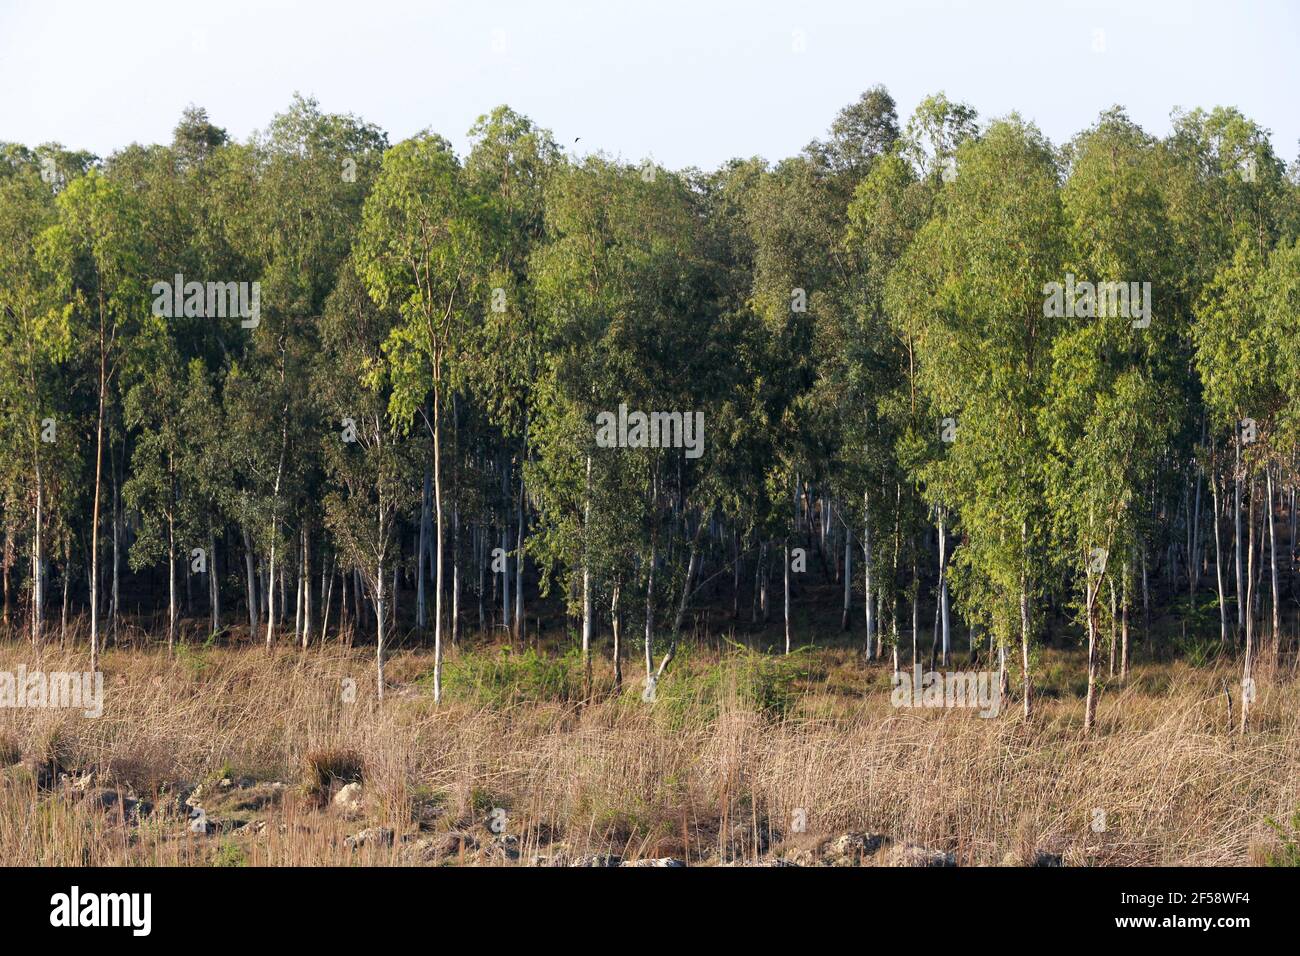 Eucalyptus trees, Landscape View Stock Photo